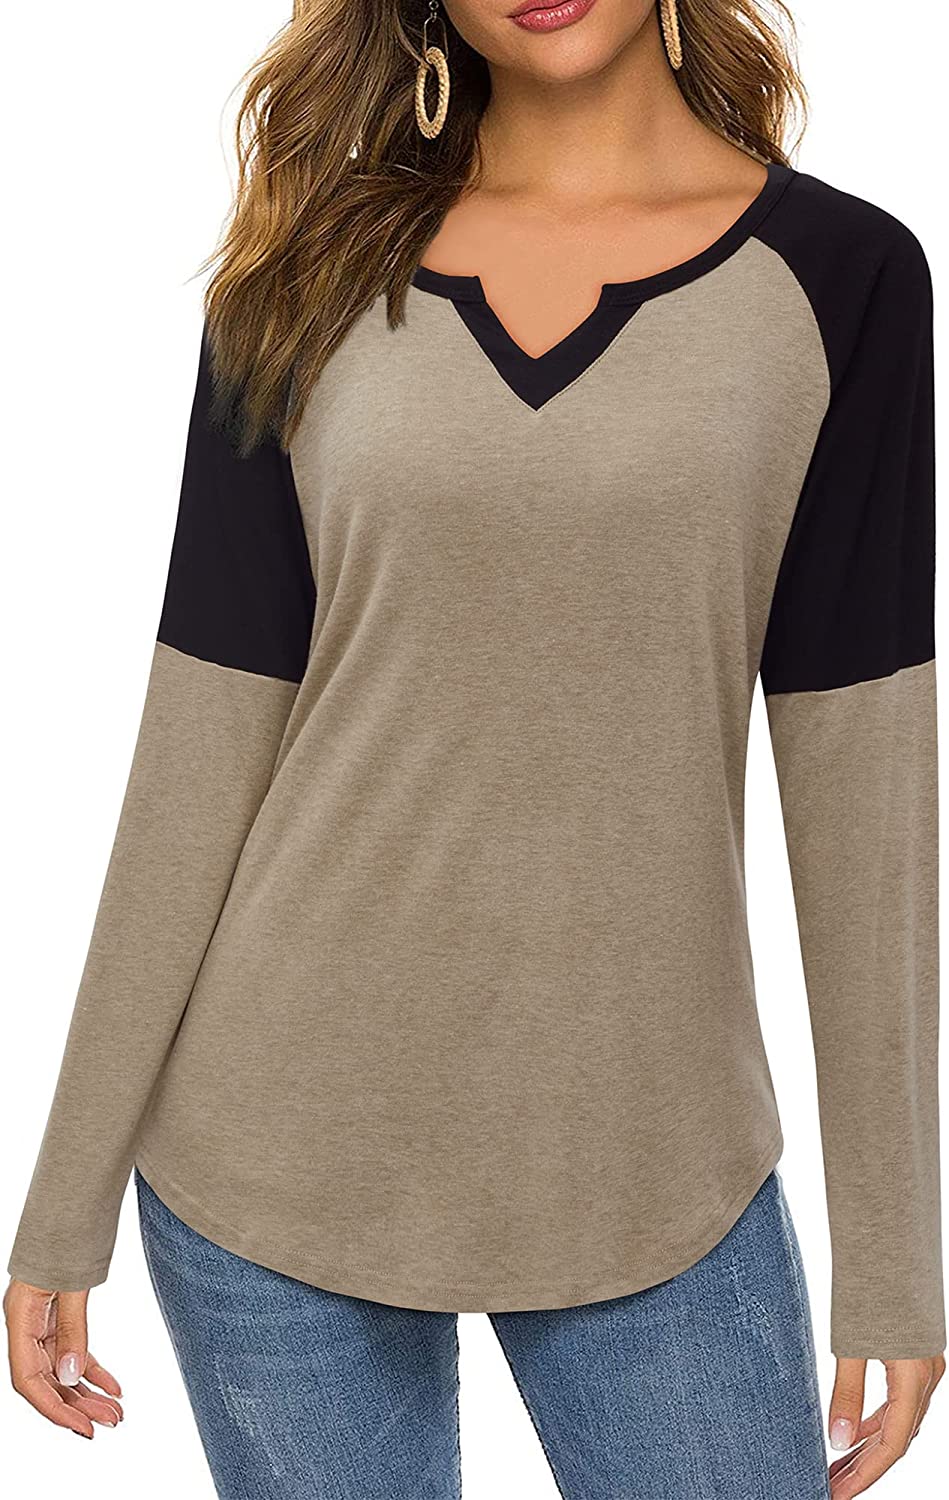 LAISHEN Women's Raglan Long Sleeve T-Shirt Color Block Henley V